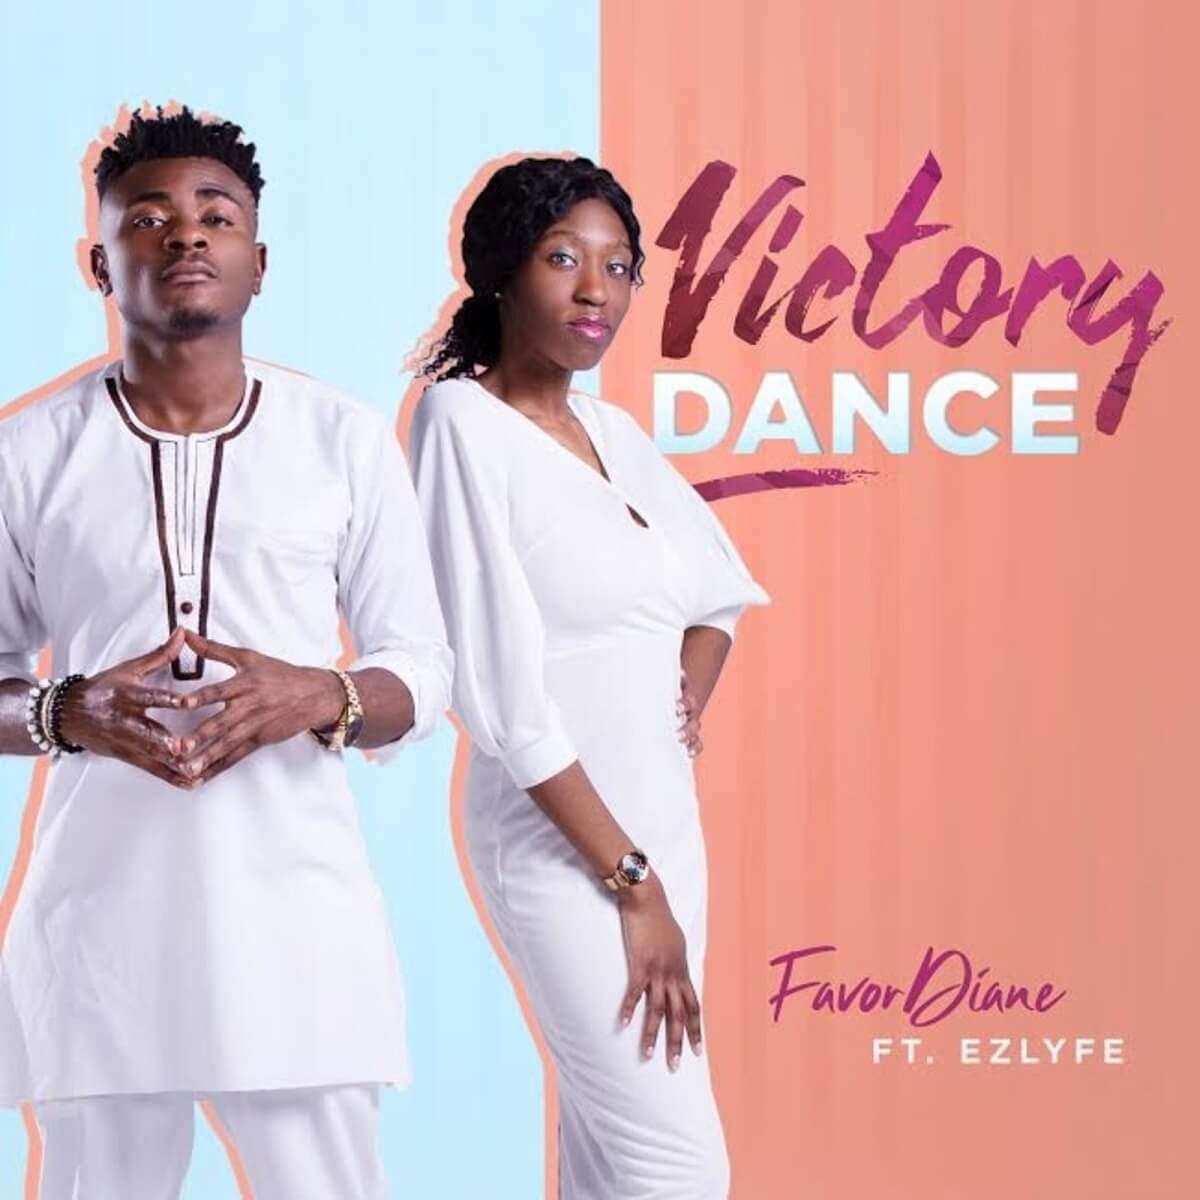 Victory-Dance-FavorDiane-Ft-EZLyfe